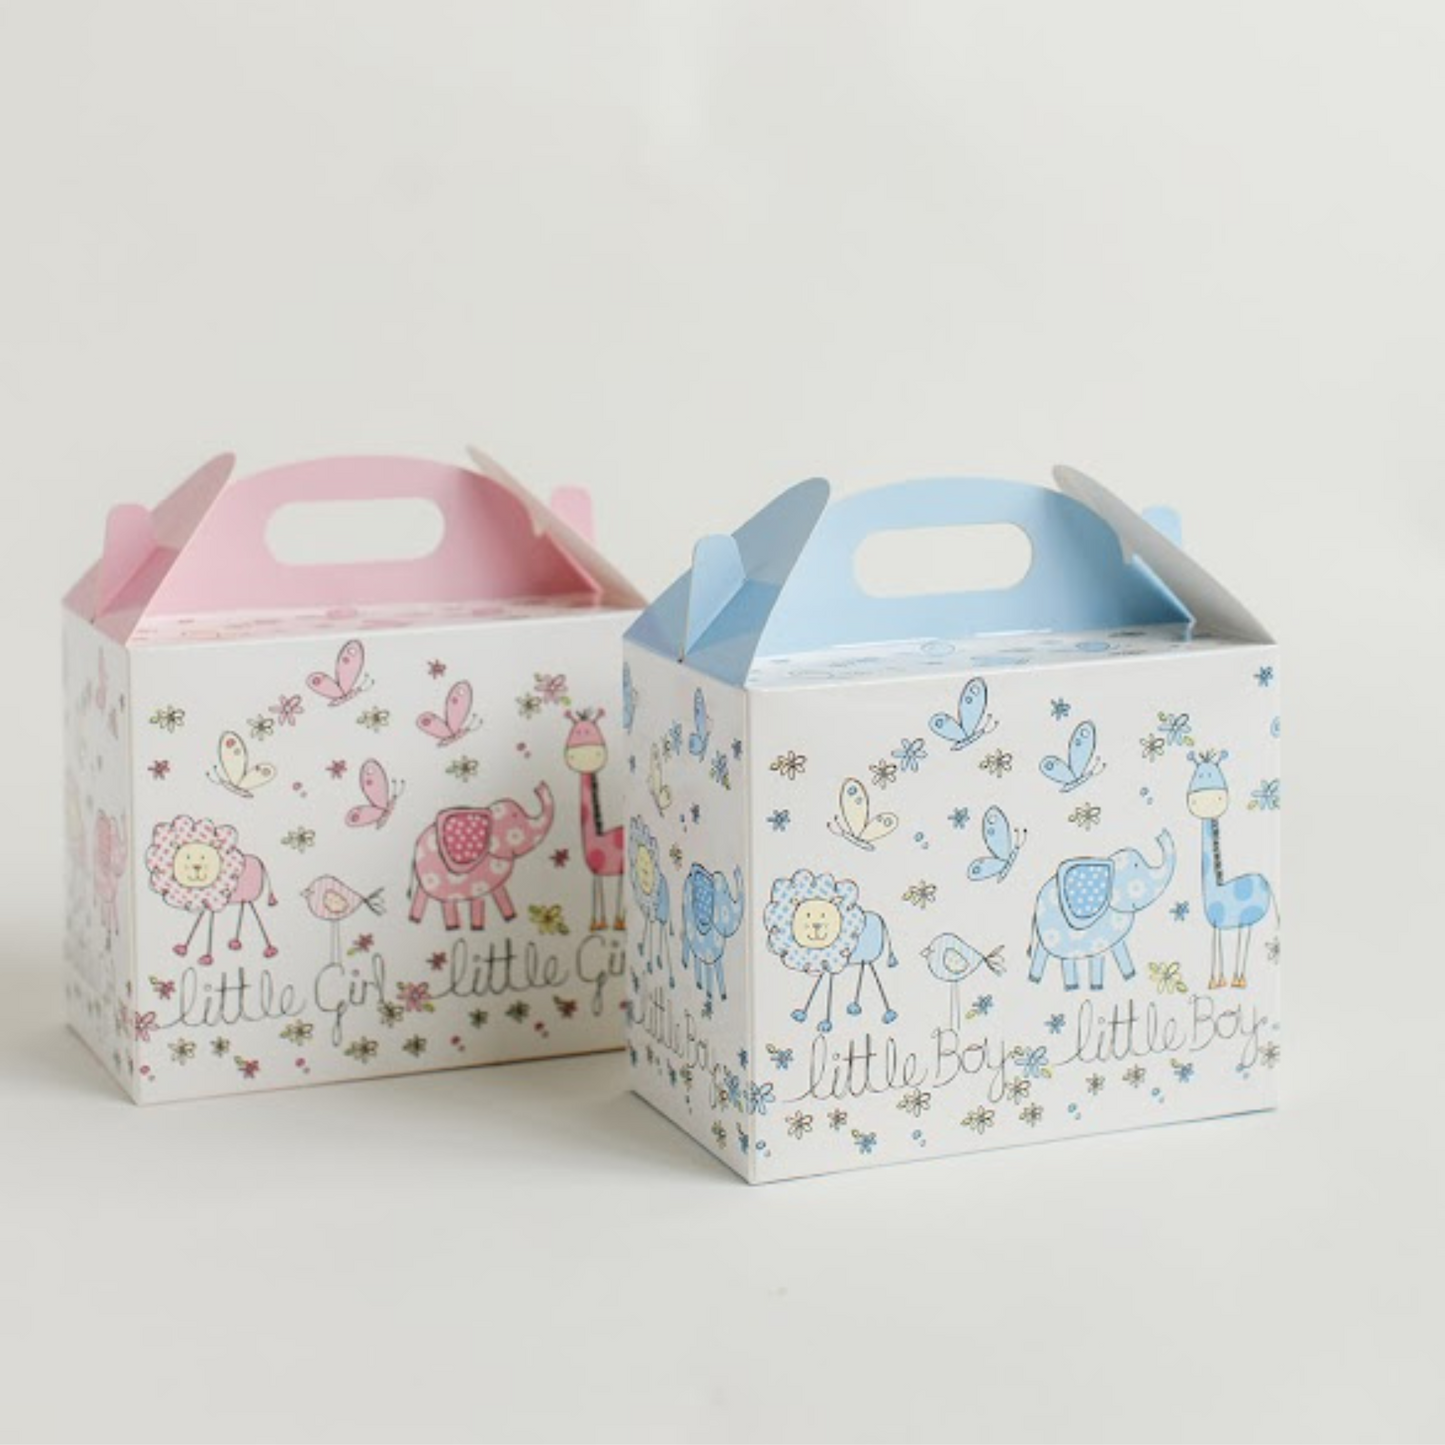 Little Girl Pink Gift Box